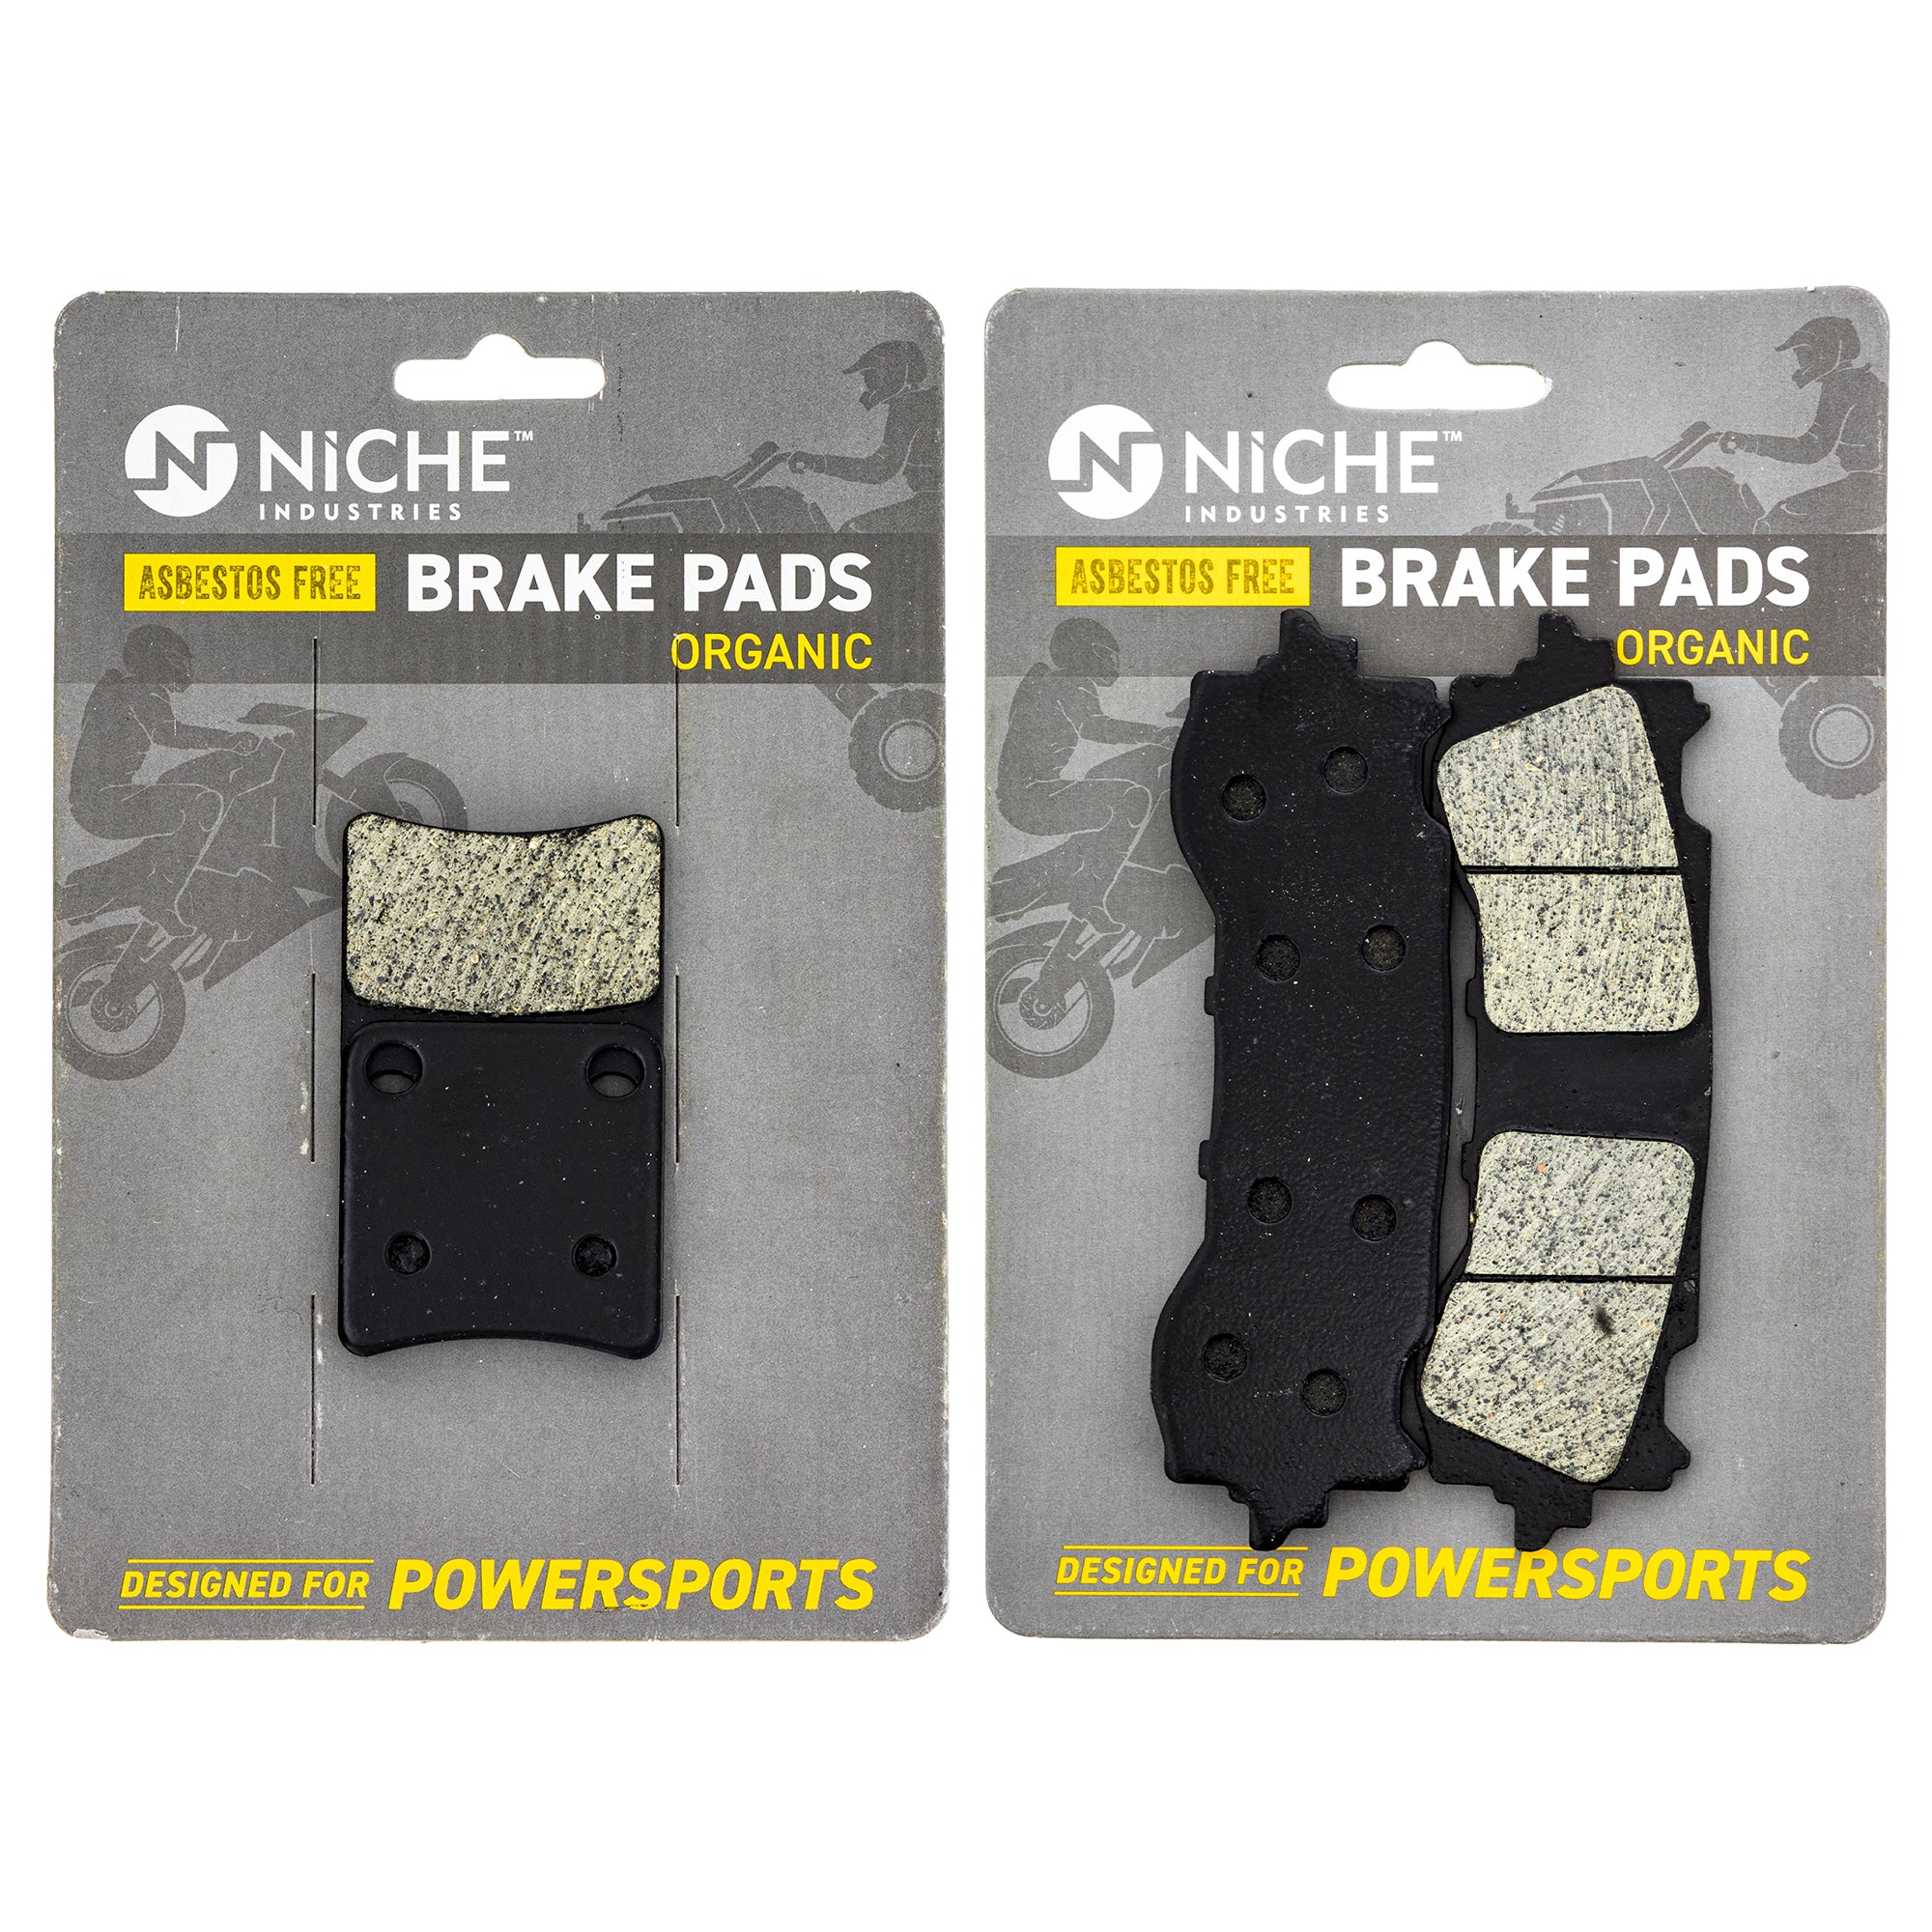 NICHE MK1002743 Brake Pad Kit Front/Rear for Honda Goldwing